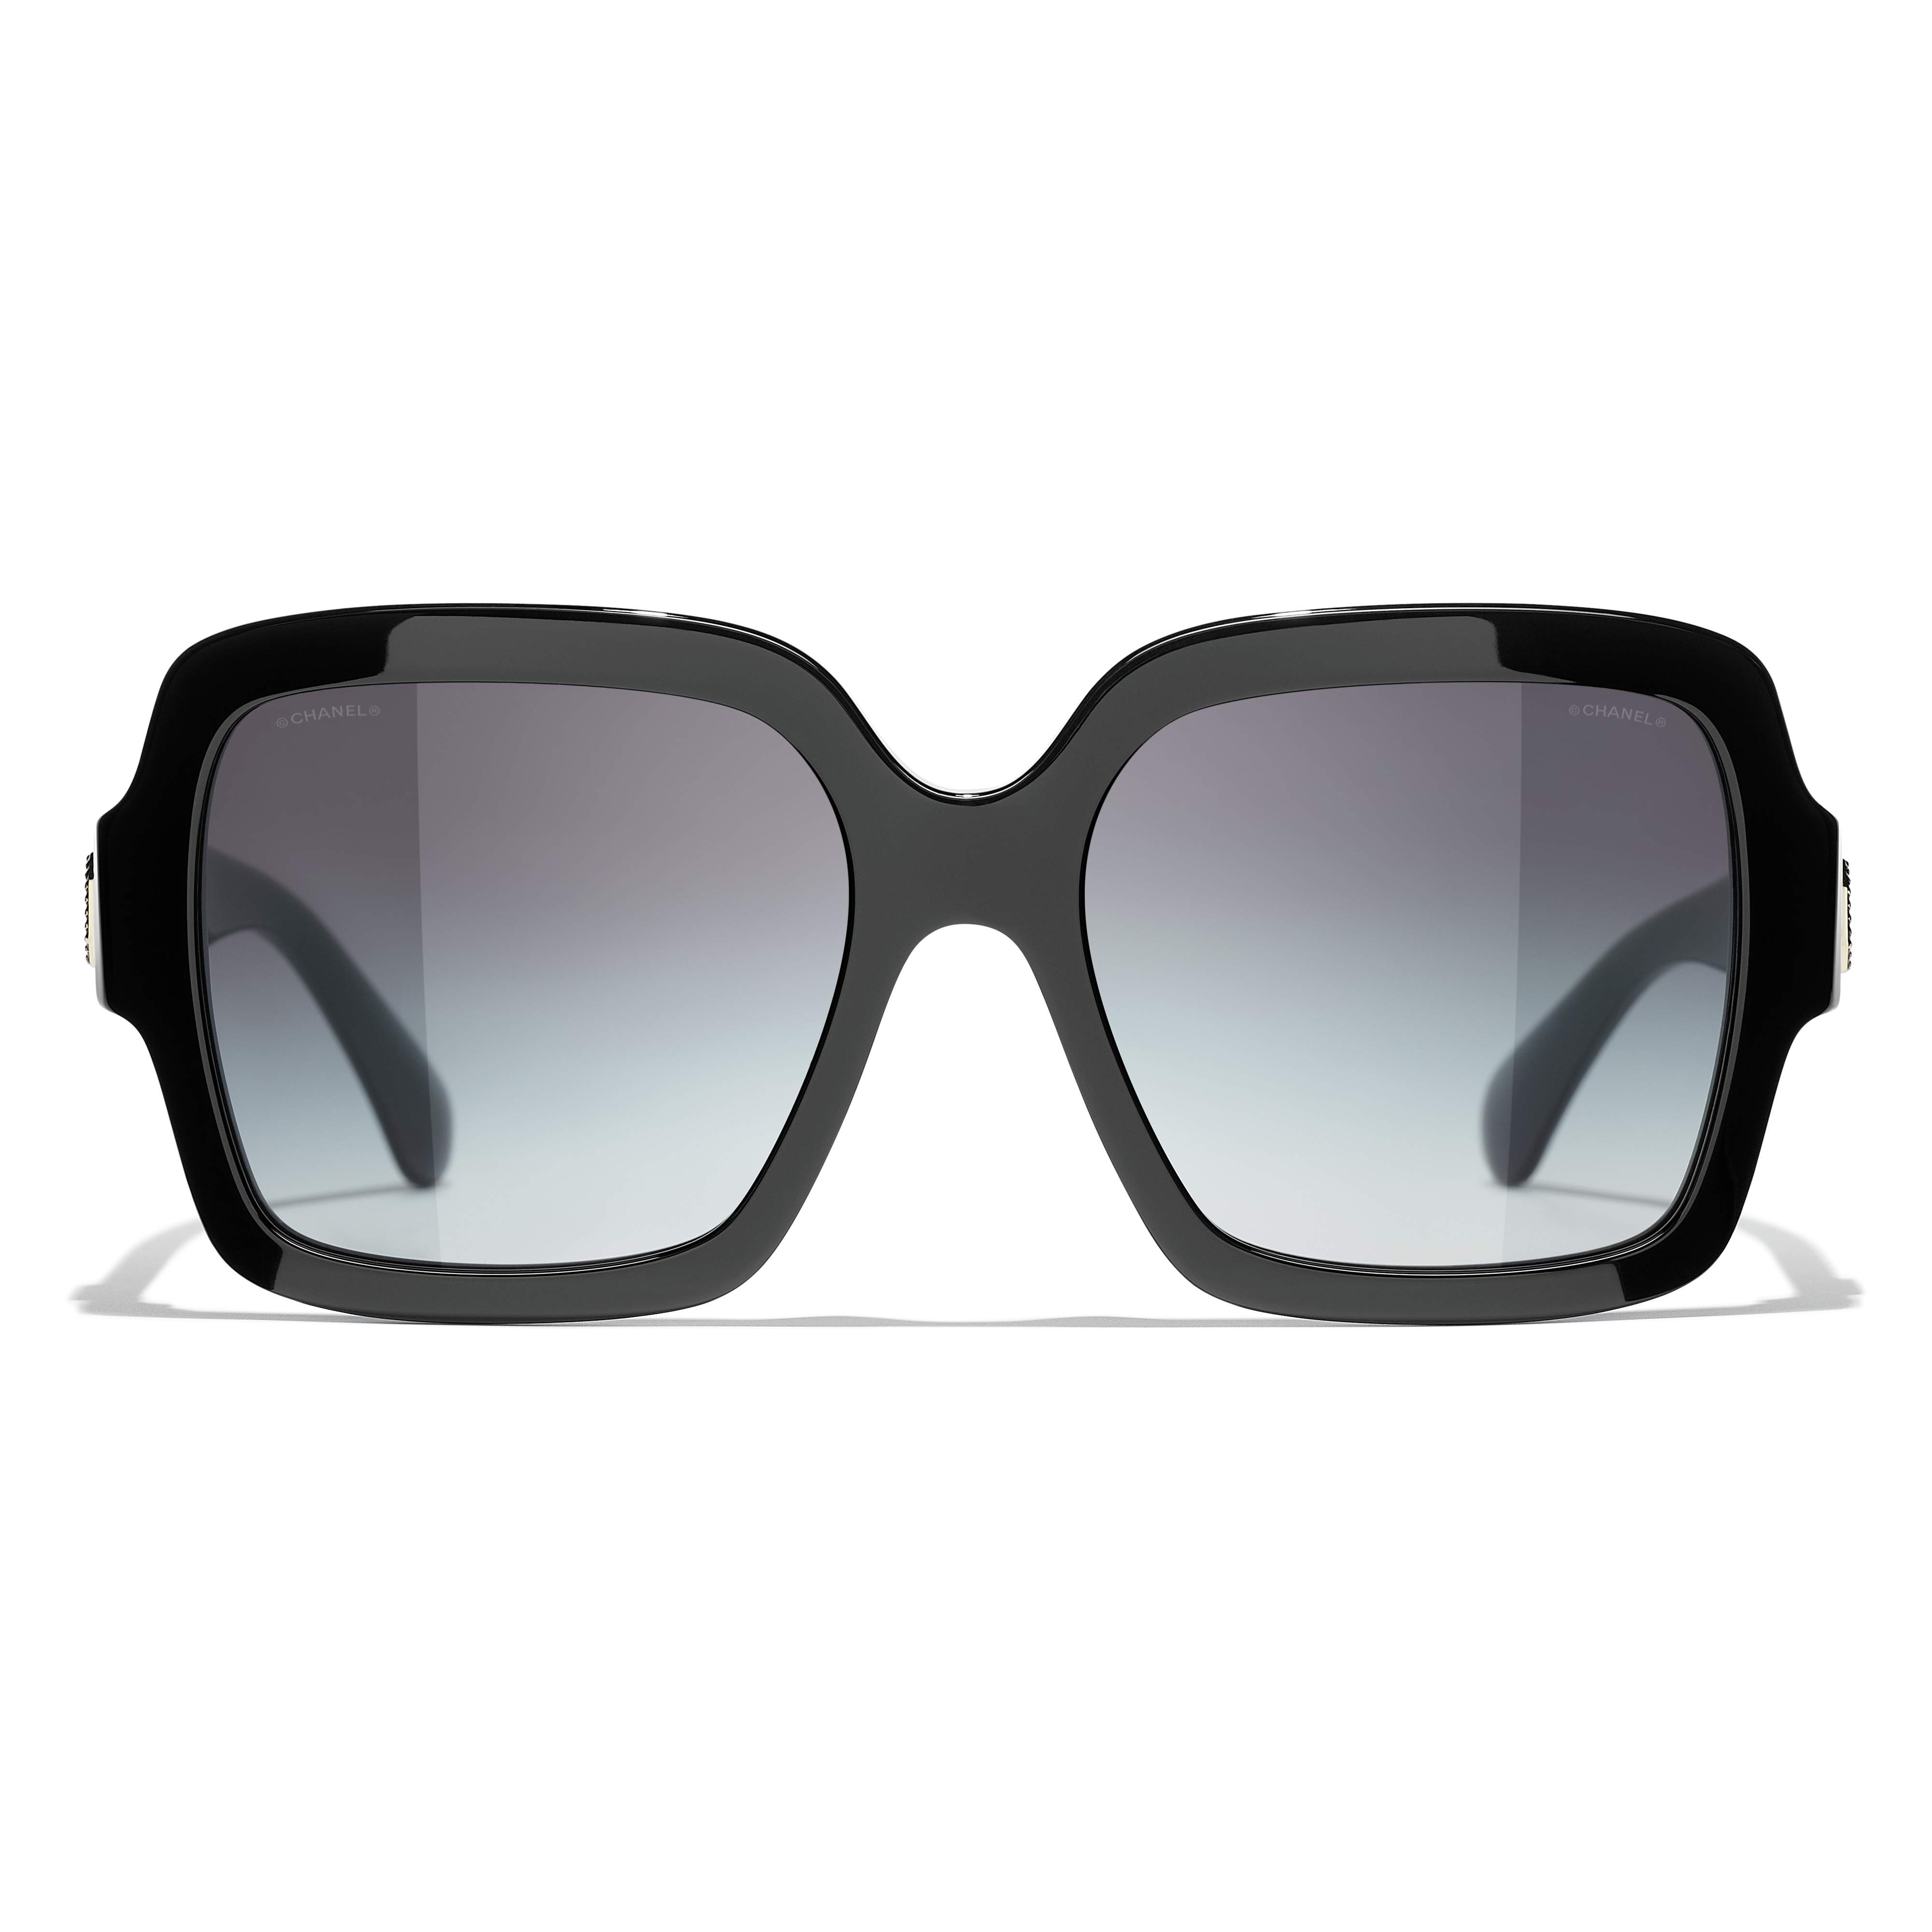 Sunglasses CHANEL Coco charms CH5479 1403/S6 56-18 Black in stock